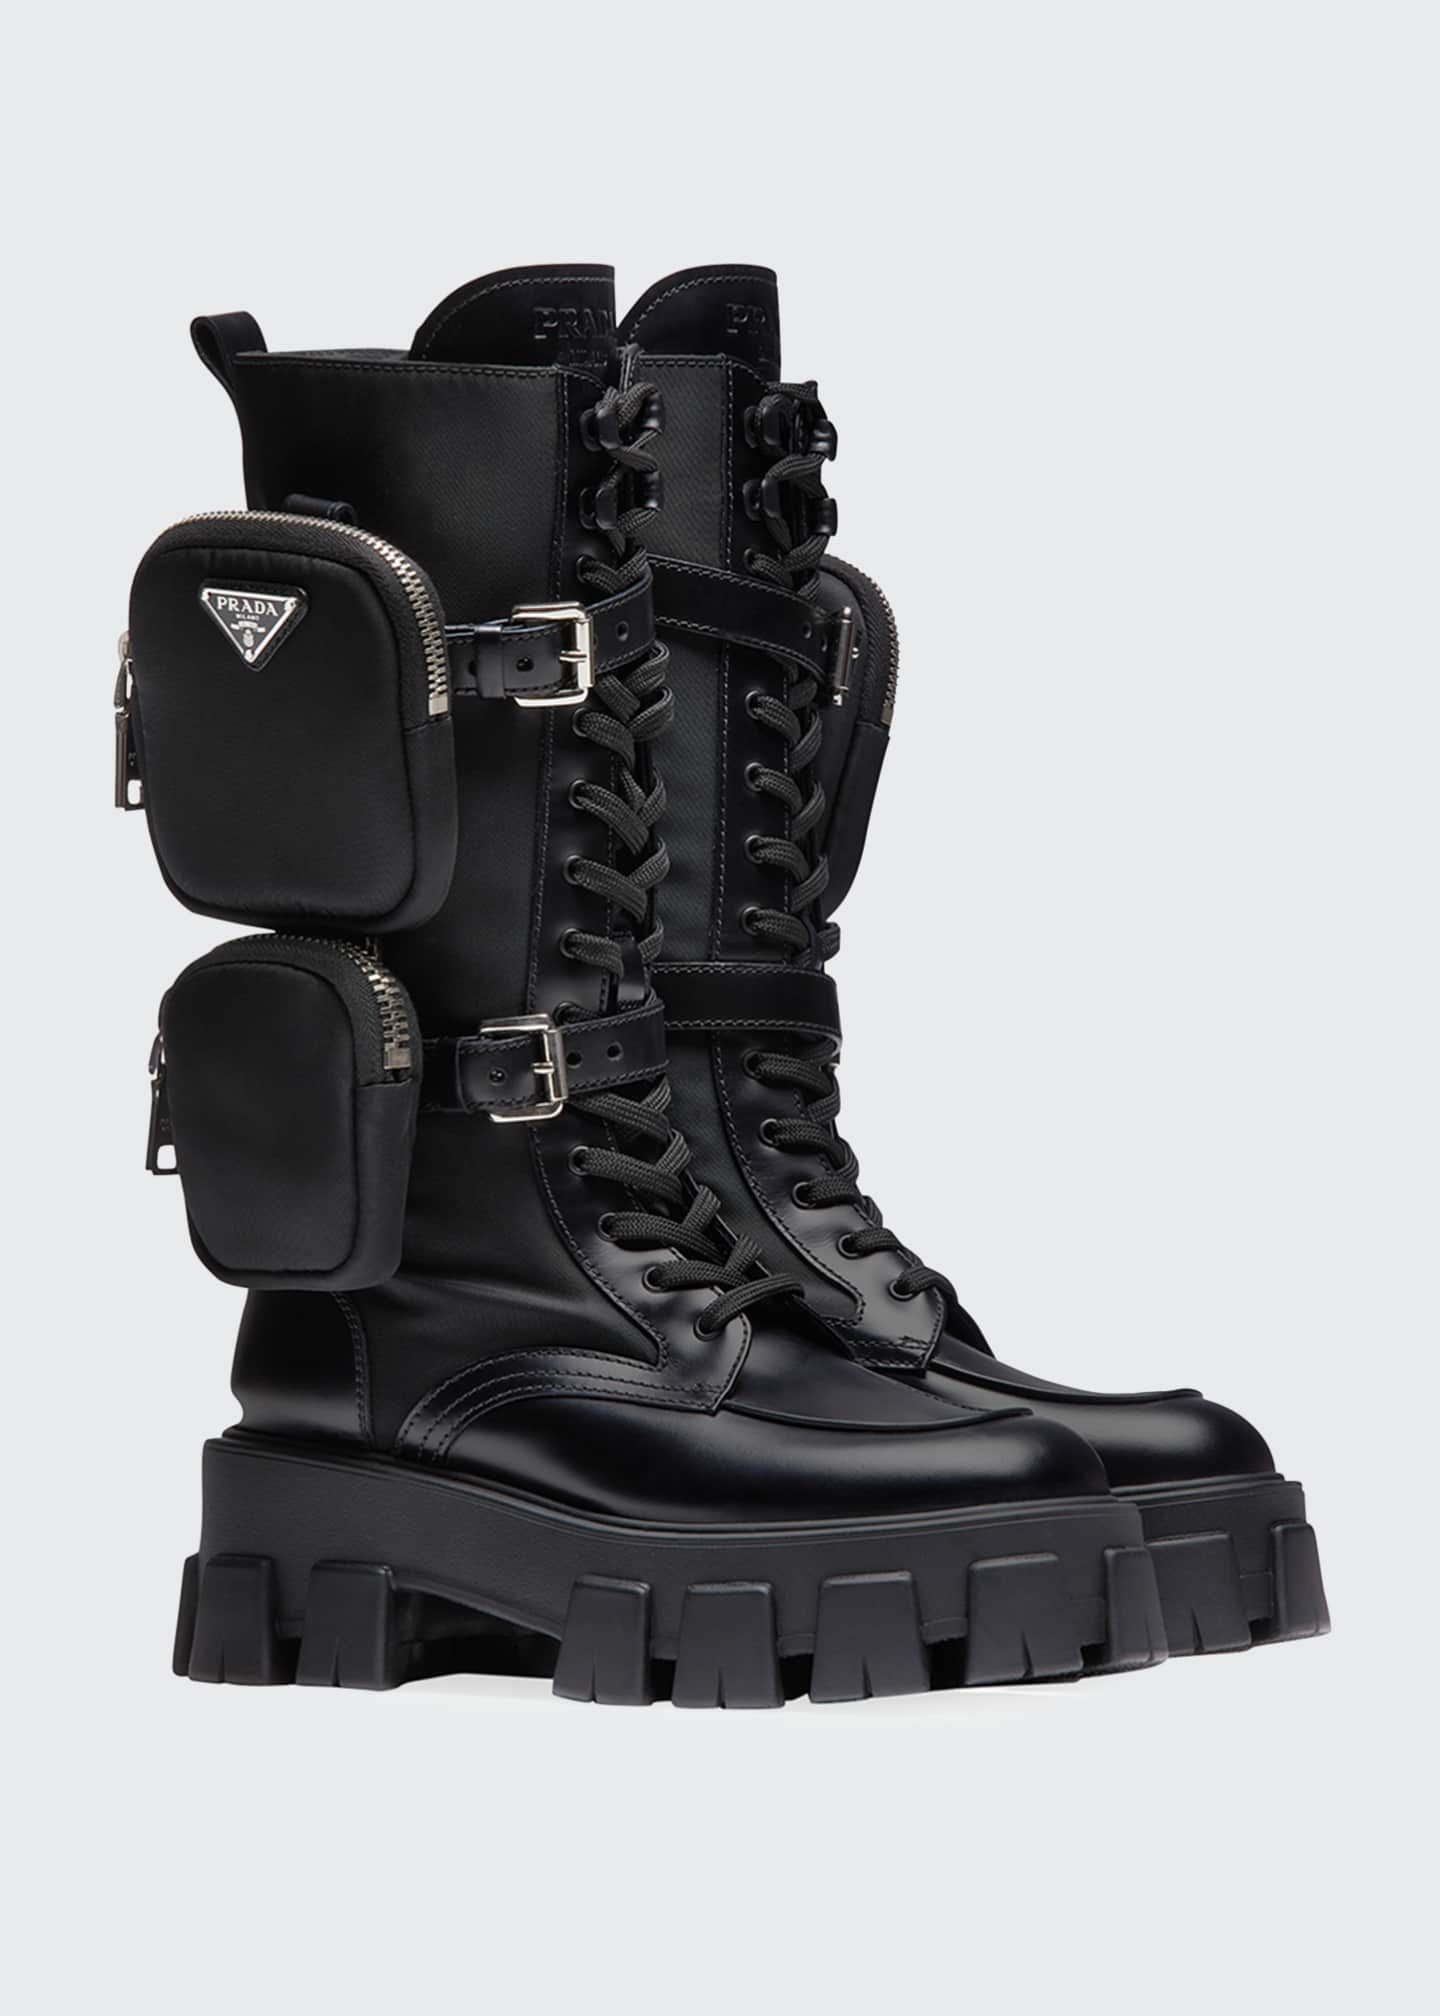 prada leather combat boots